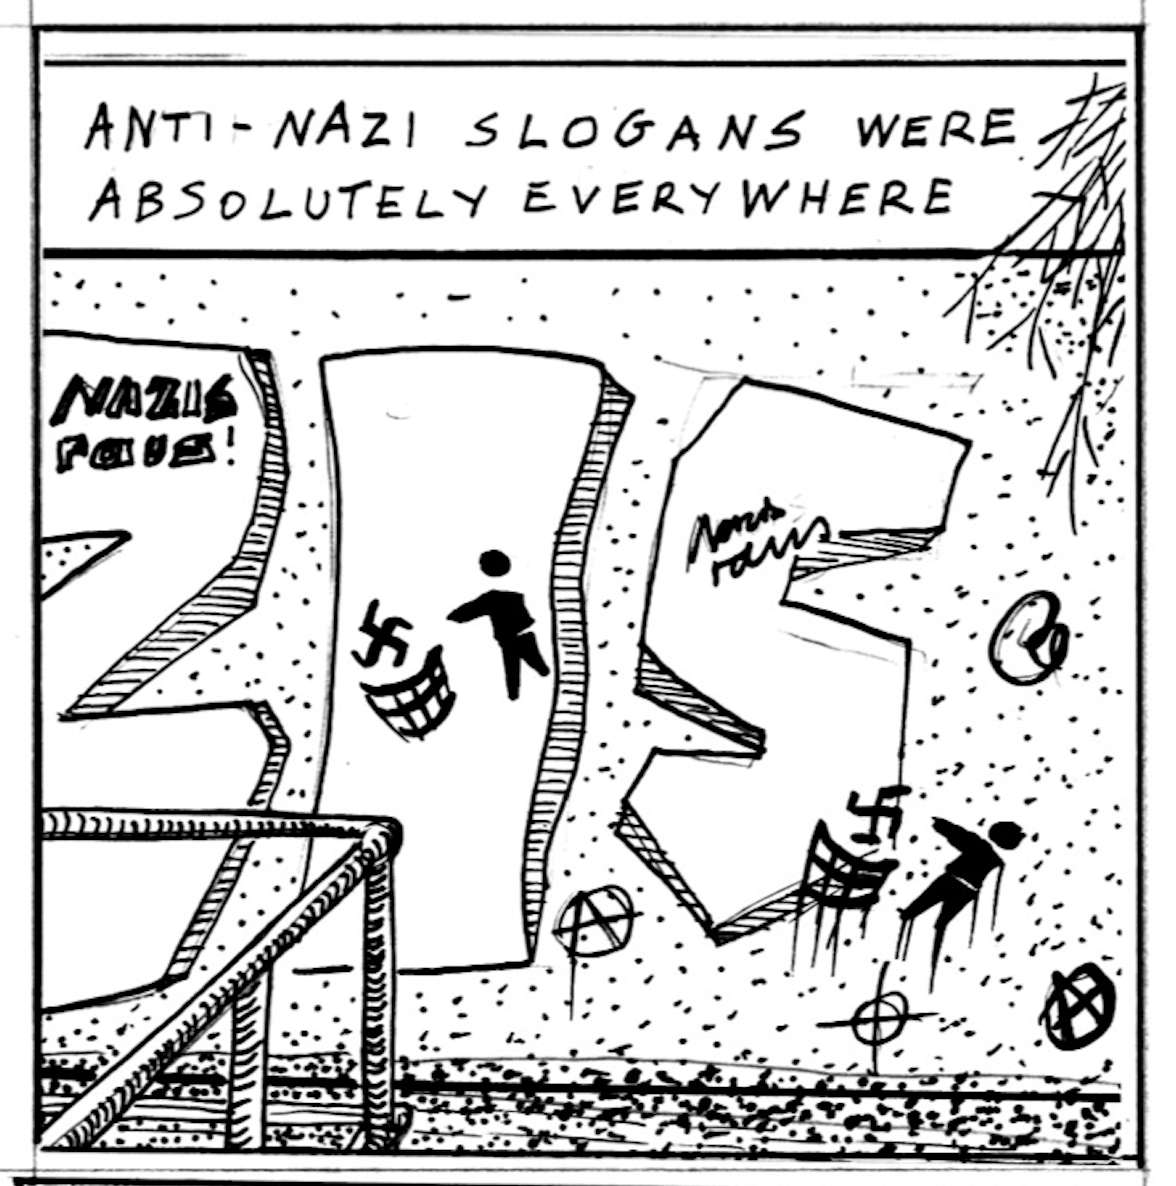 â€œAnti-Nazi slogans were absolutely everywhere.â€ A wall is covered in graffiti reading, â€œNazis raus!â€ with people throwing swastikas in trash cans. Anarchist circle-As are also on the wall. 